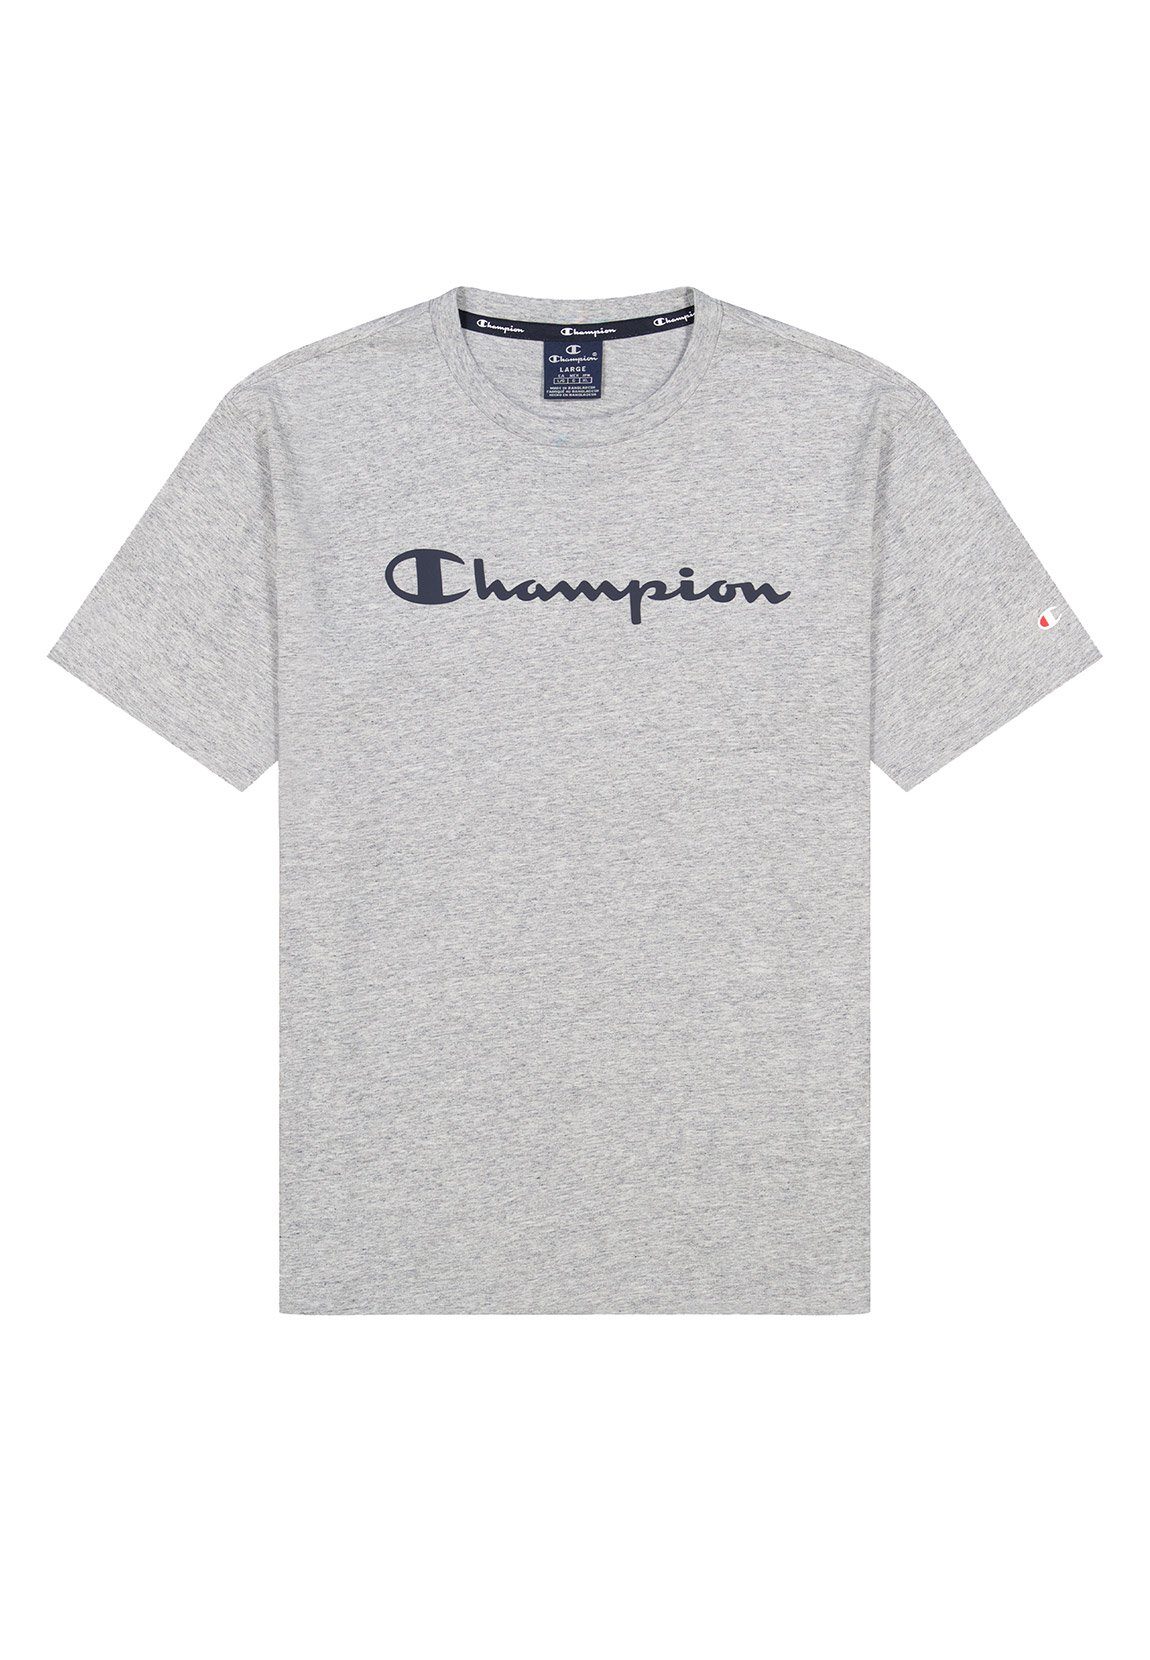 Grau 217146 T-Shirt Champion Herren NOXM Champion T-Shirt EM021